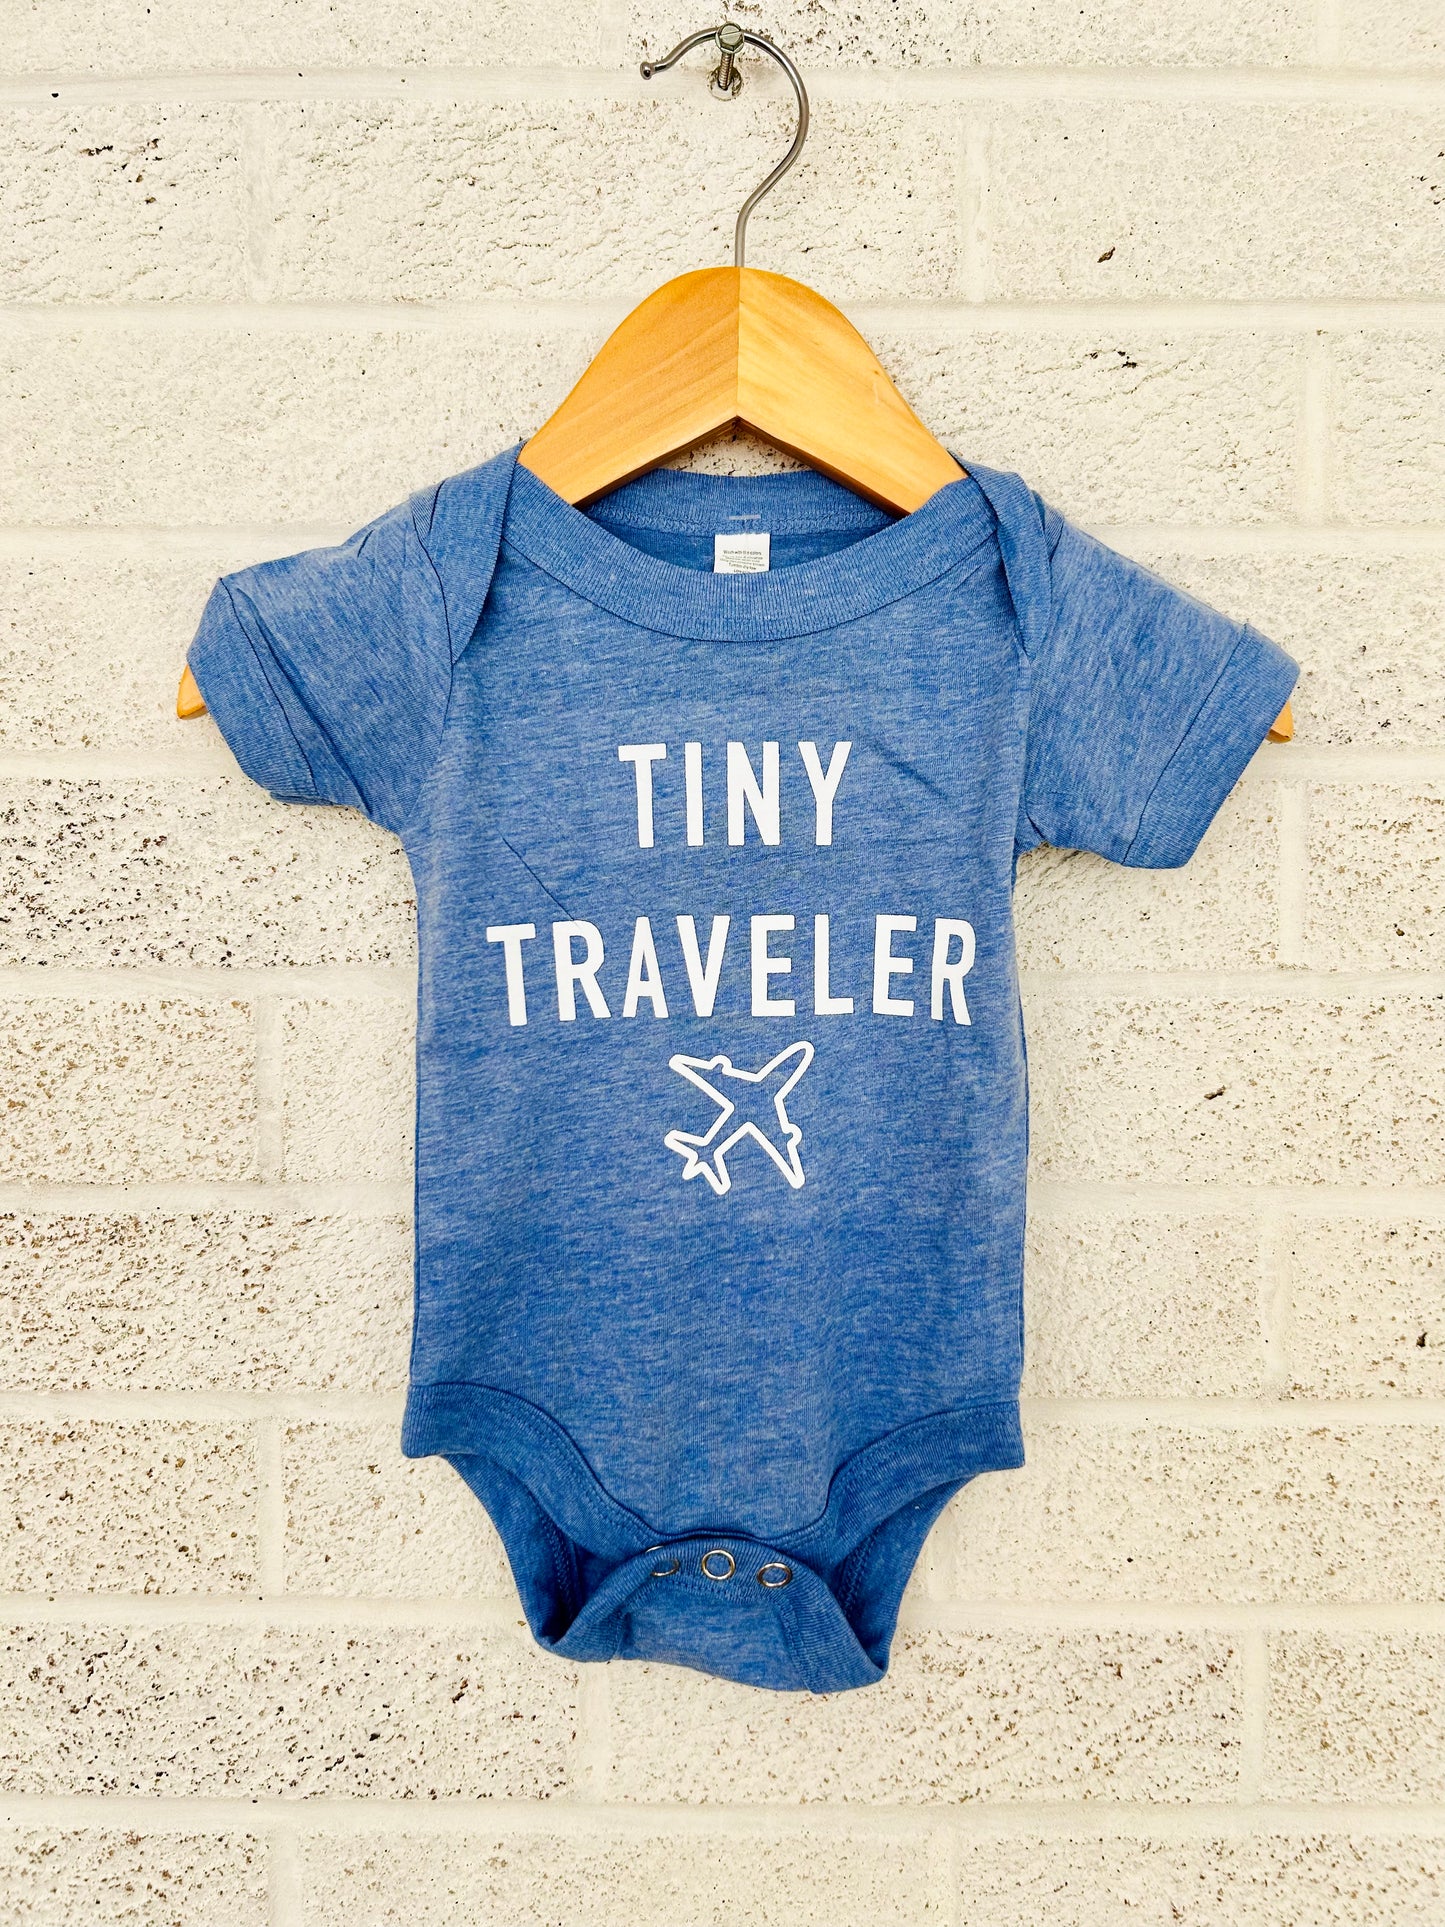 Tiny Traveler Baby Bodysuit CAK MADE-TO-ORDER